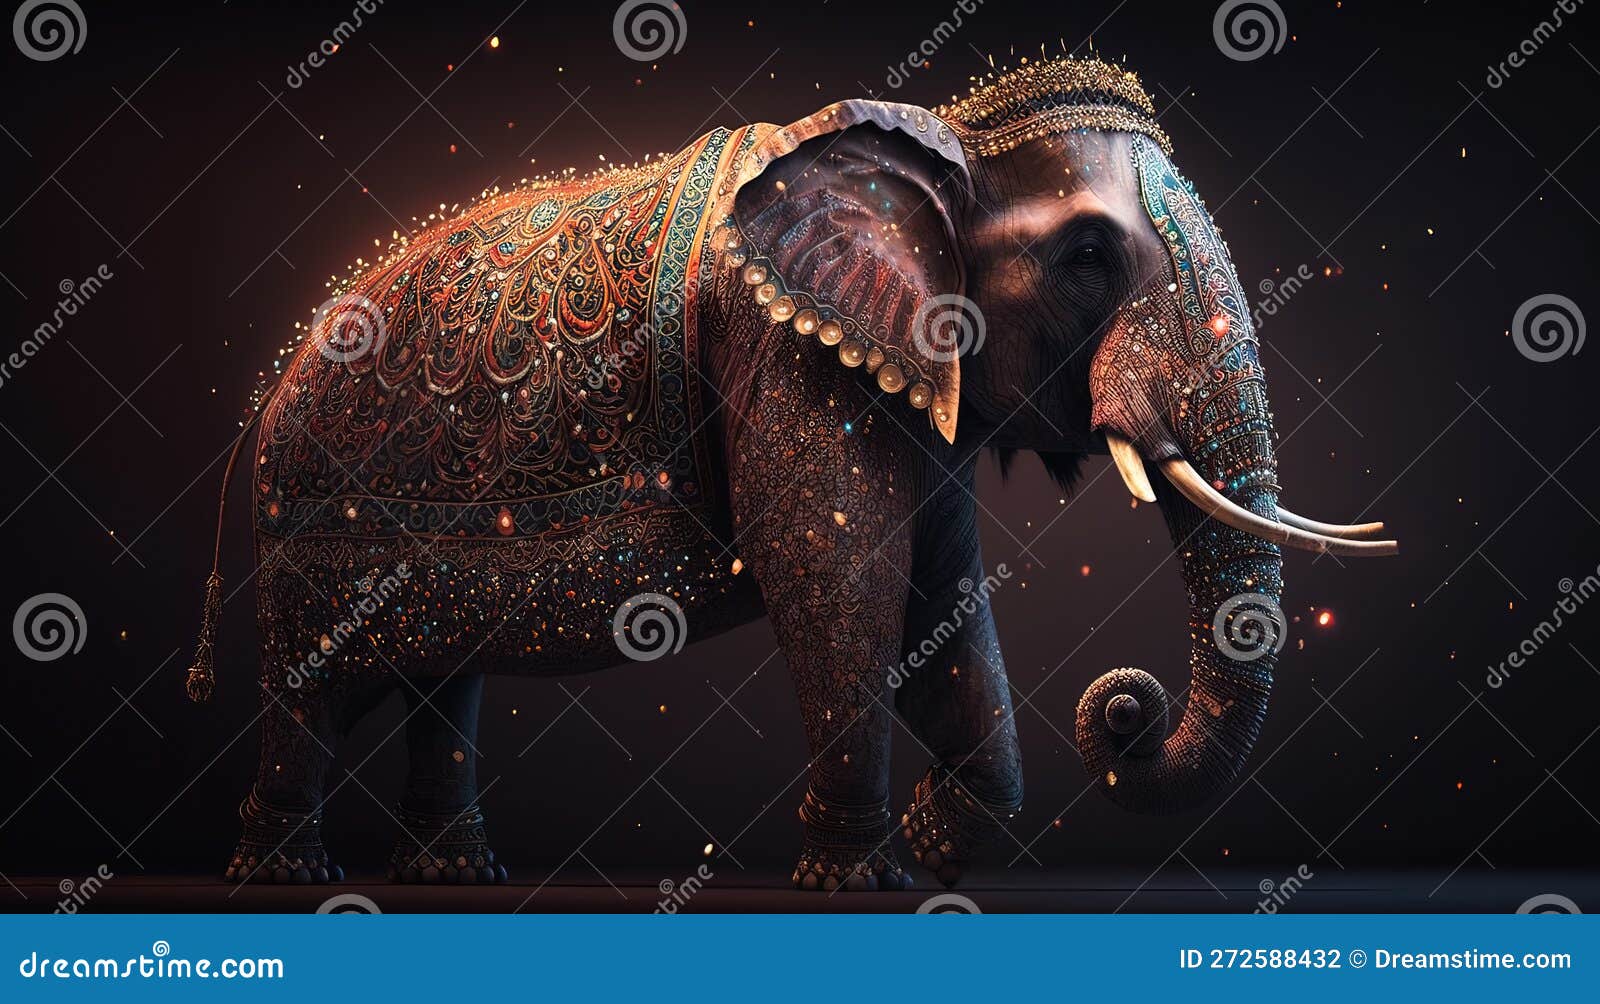 Elephant Wallpapers HD High Quality - PixelsTalk.Net